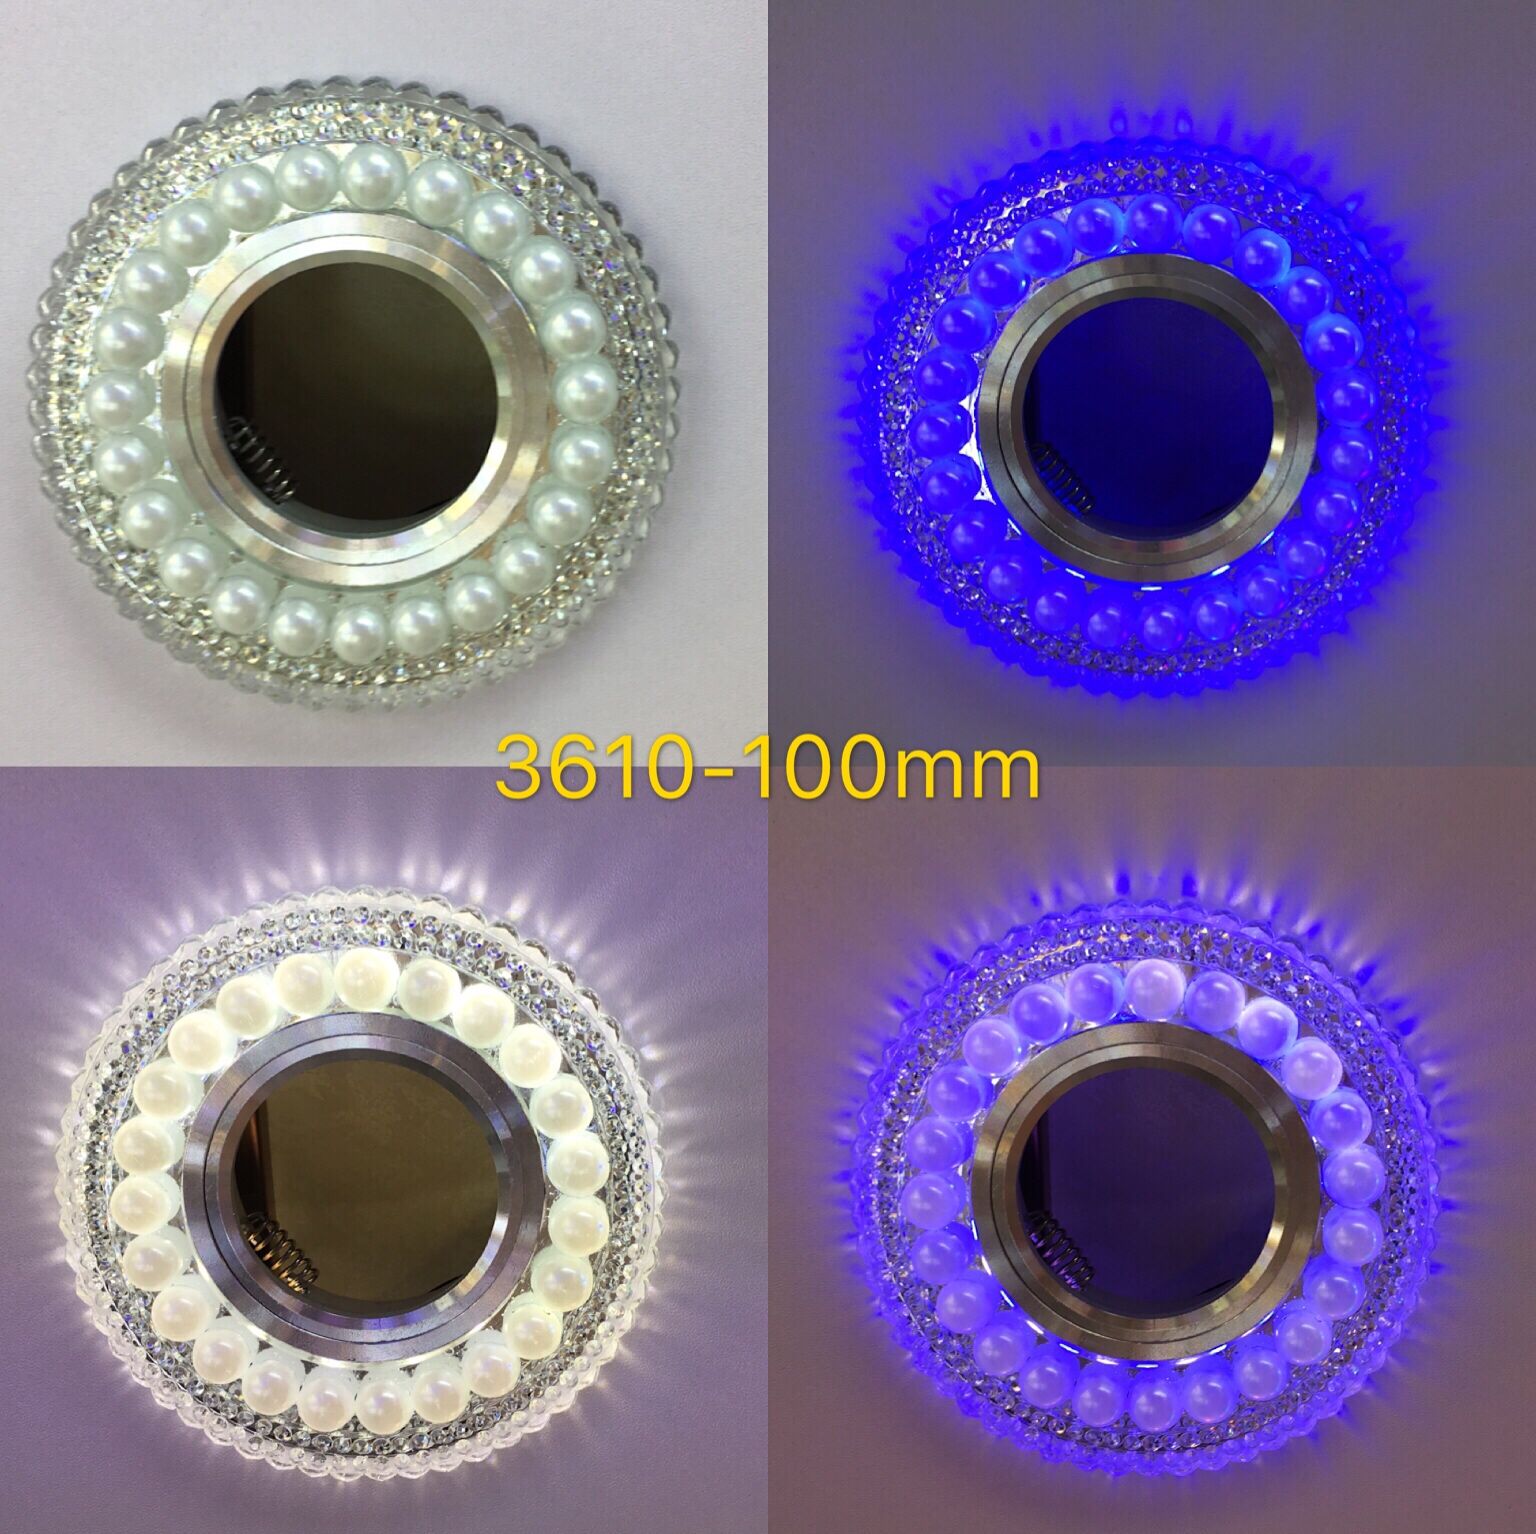 LED downlight-3610